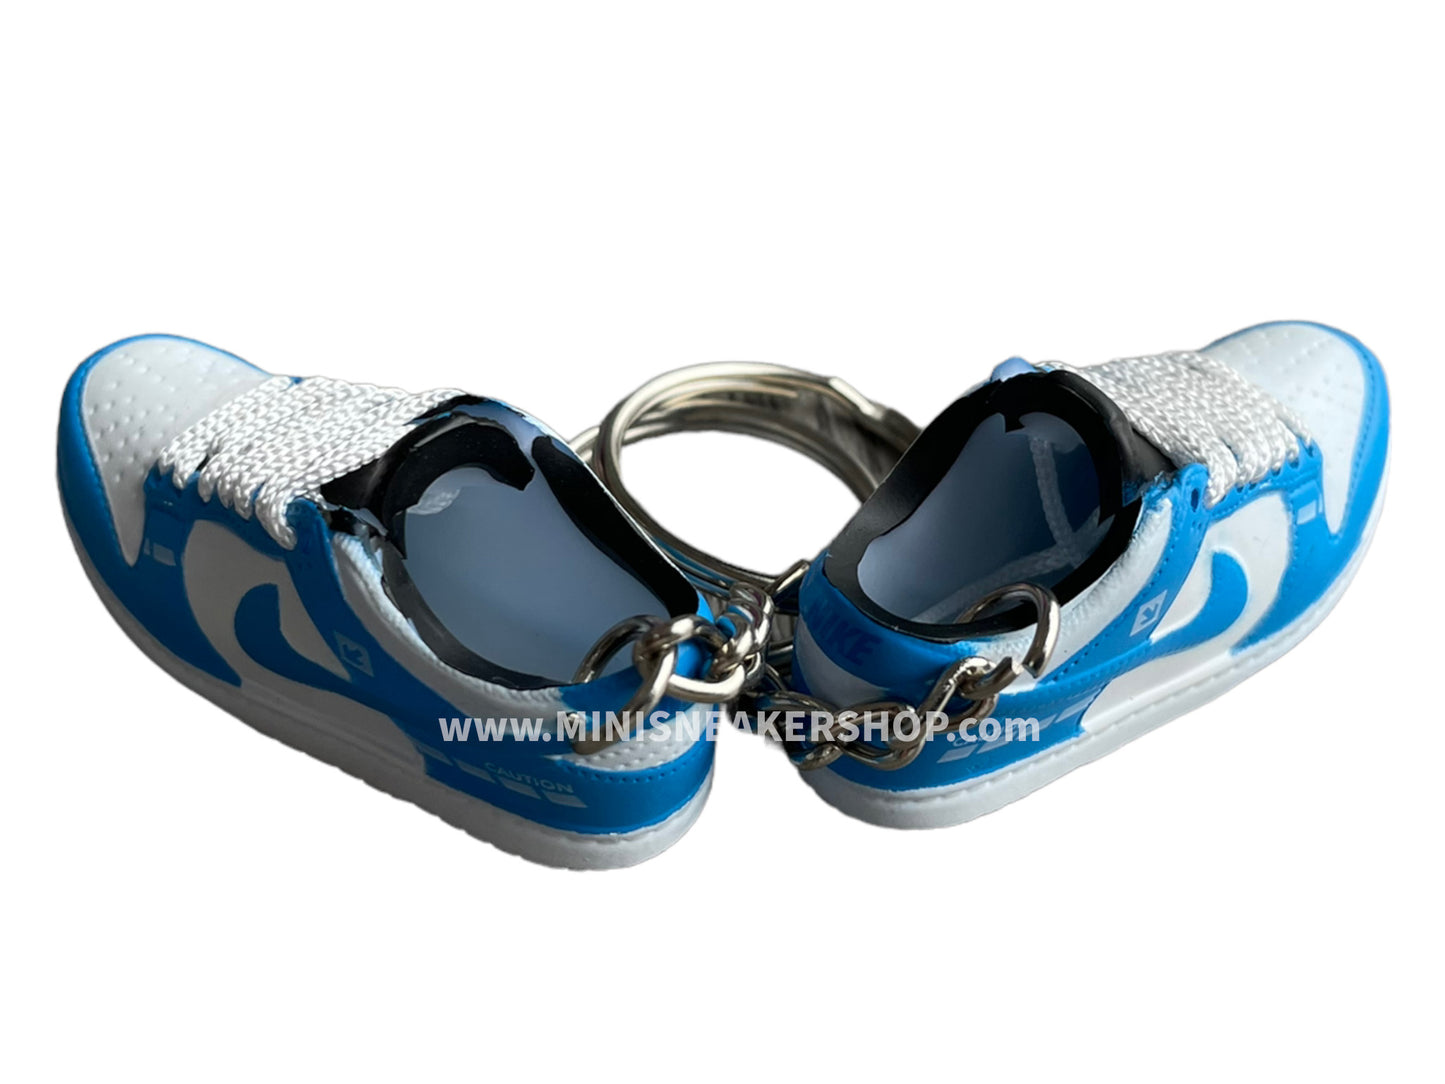 Mini sneaker keychain 3D Dunk - Caution Blue